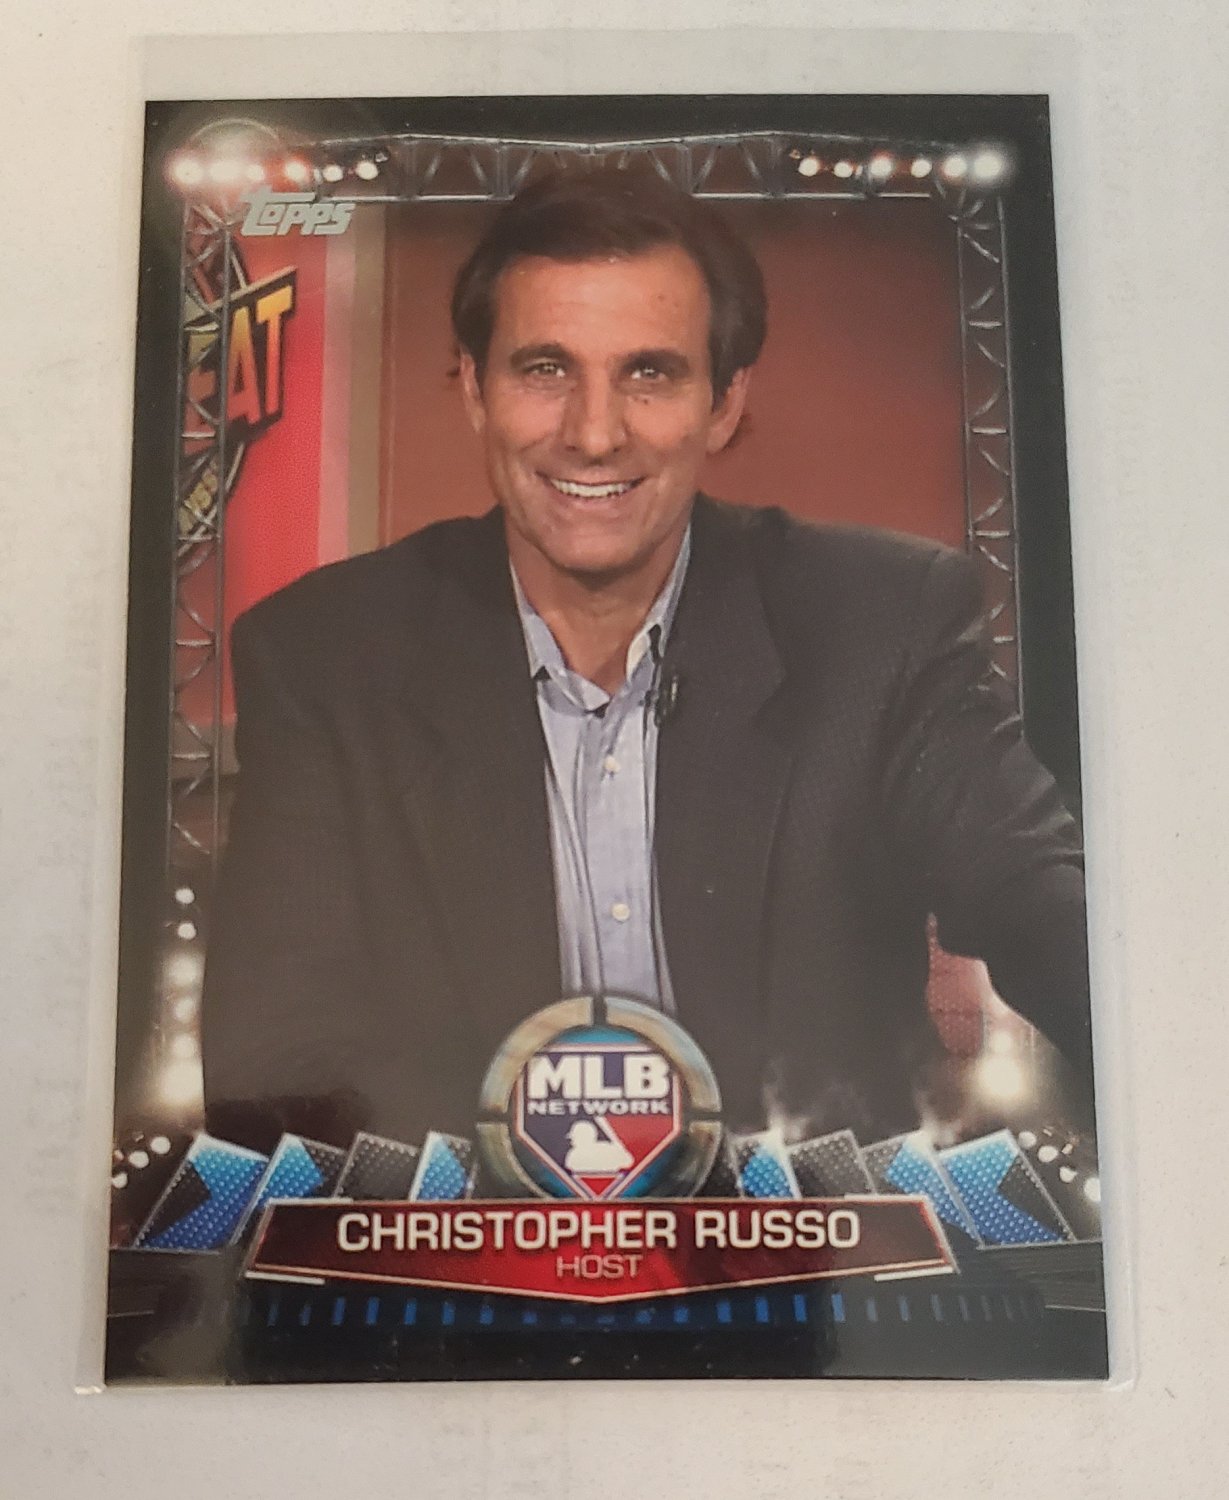 Christopher Russo 2017 Topps Update MLB Network Insert Card